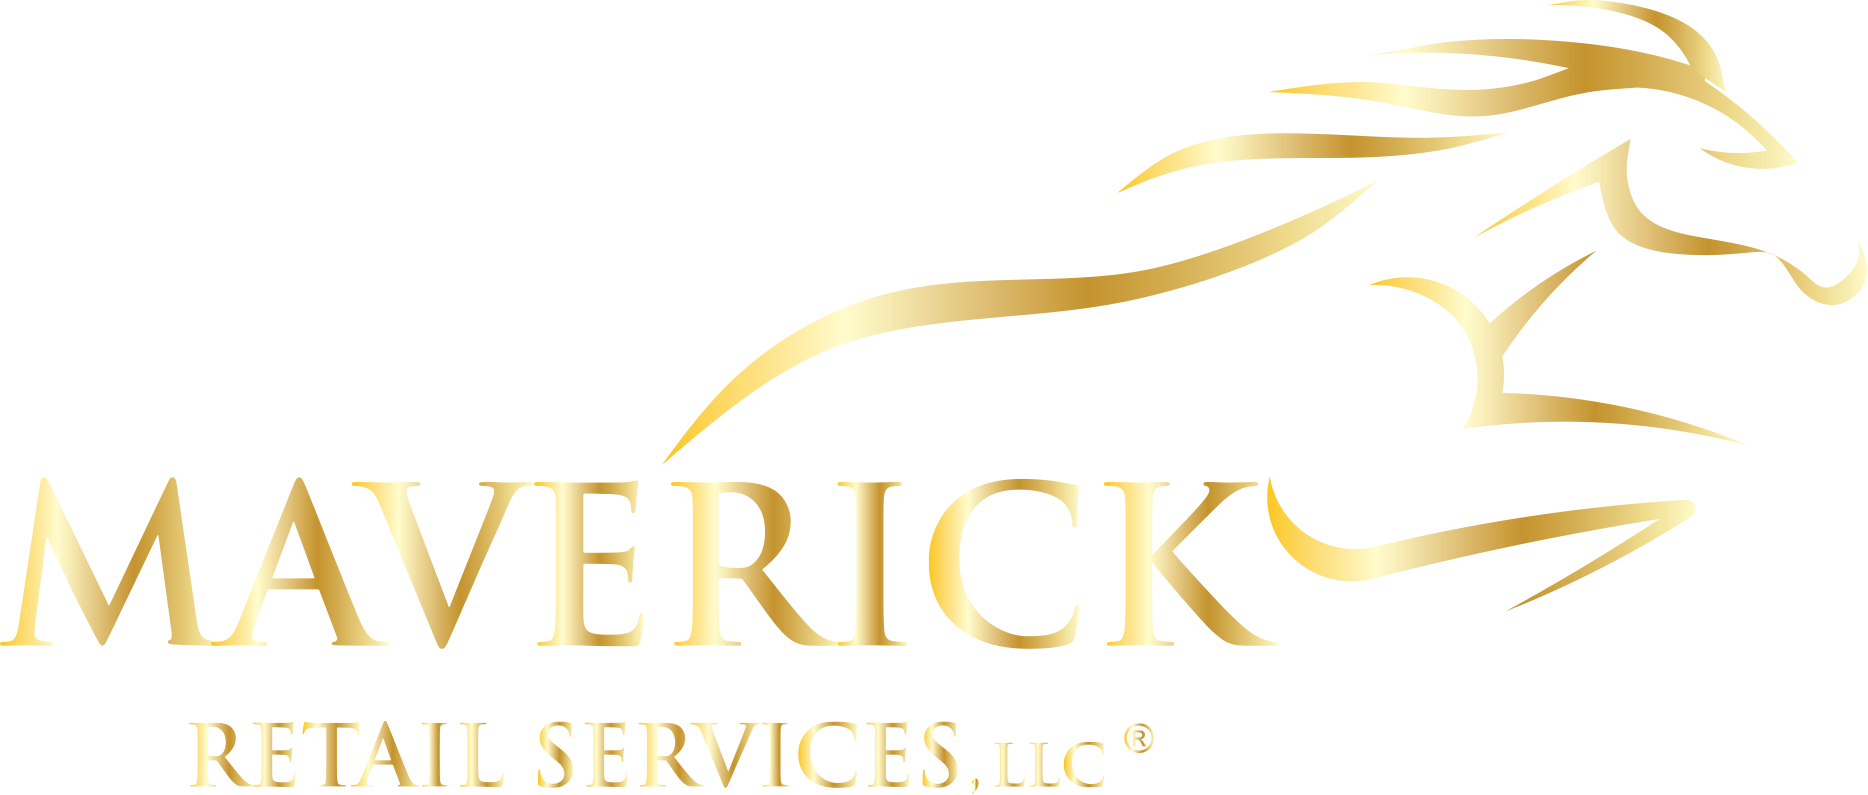 Maverick Retail Services Trademark